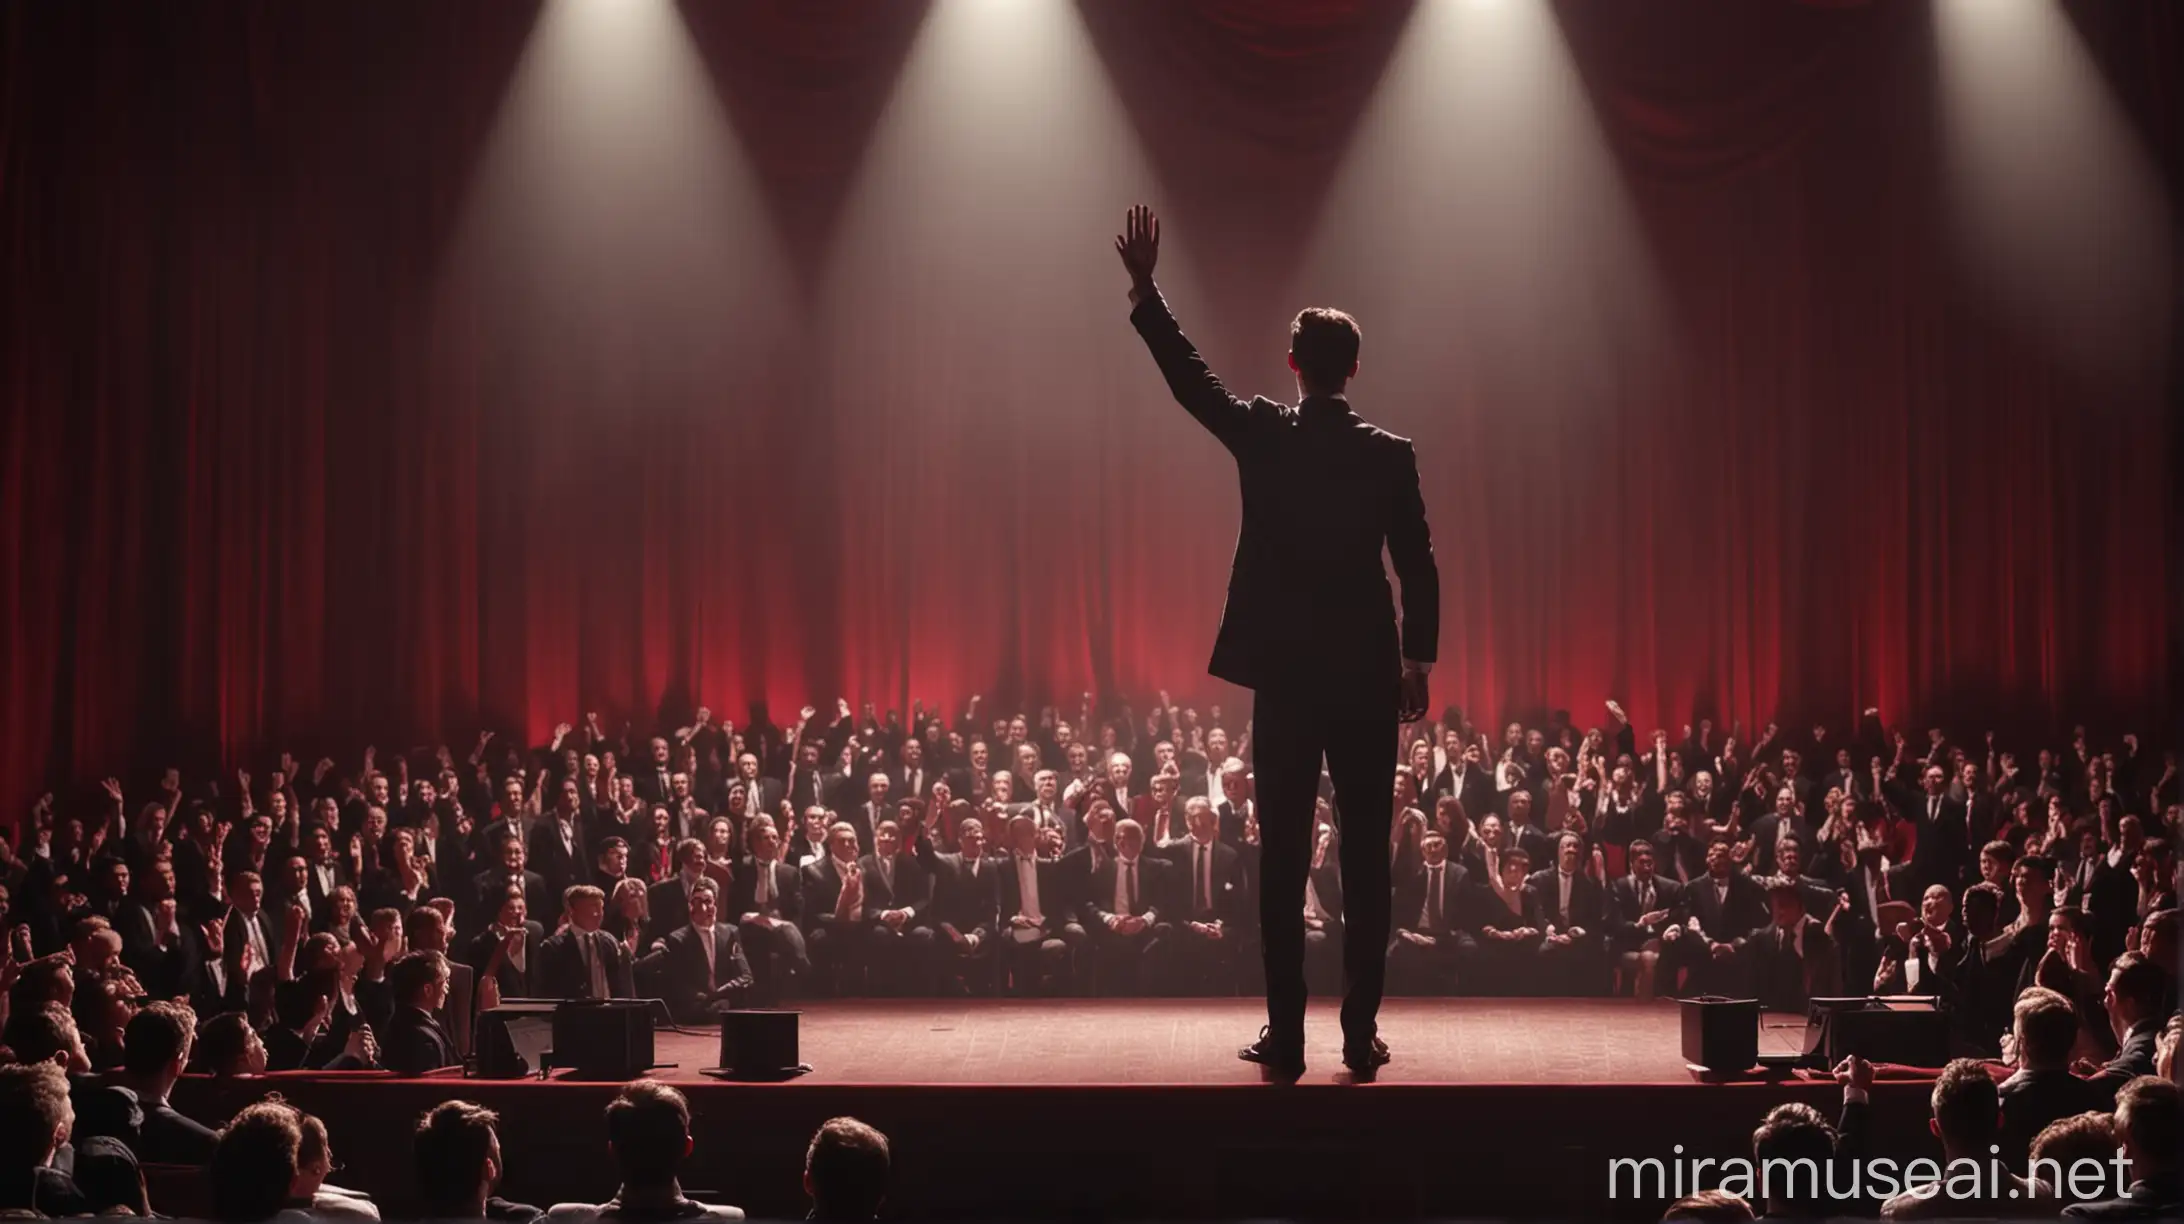 Formally Dressed Gentleman Speaking on Stage to Audience in Dark Red Auditorium